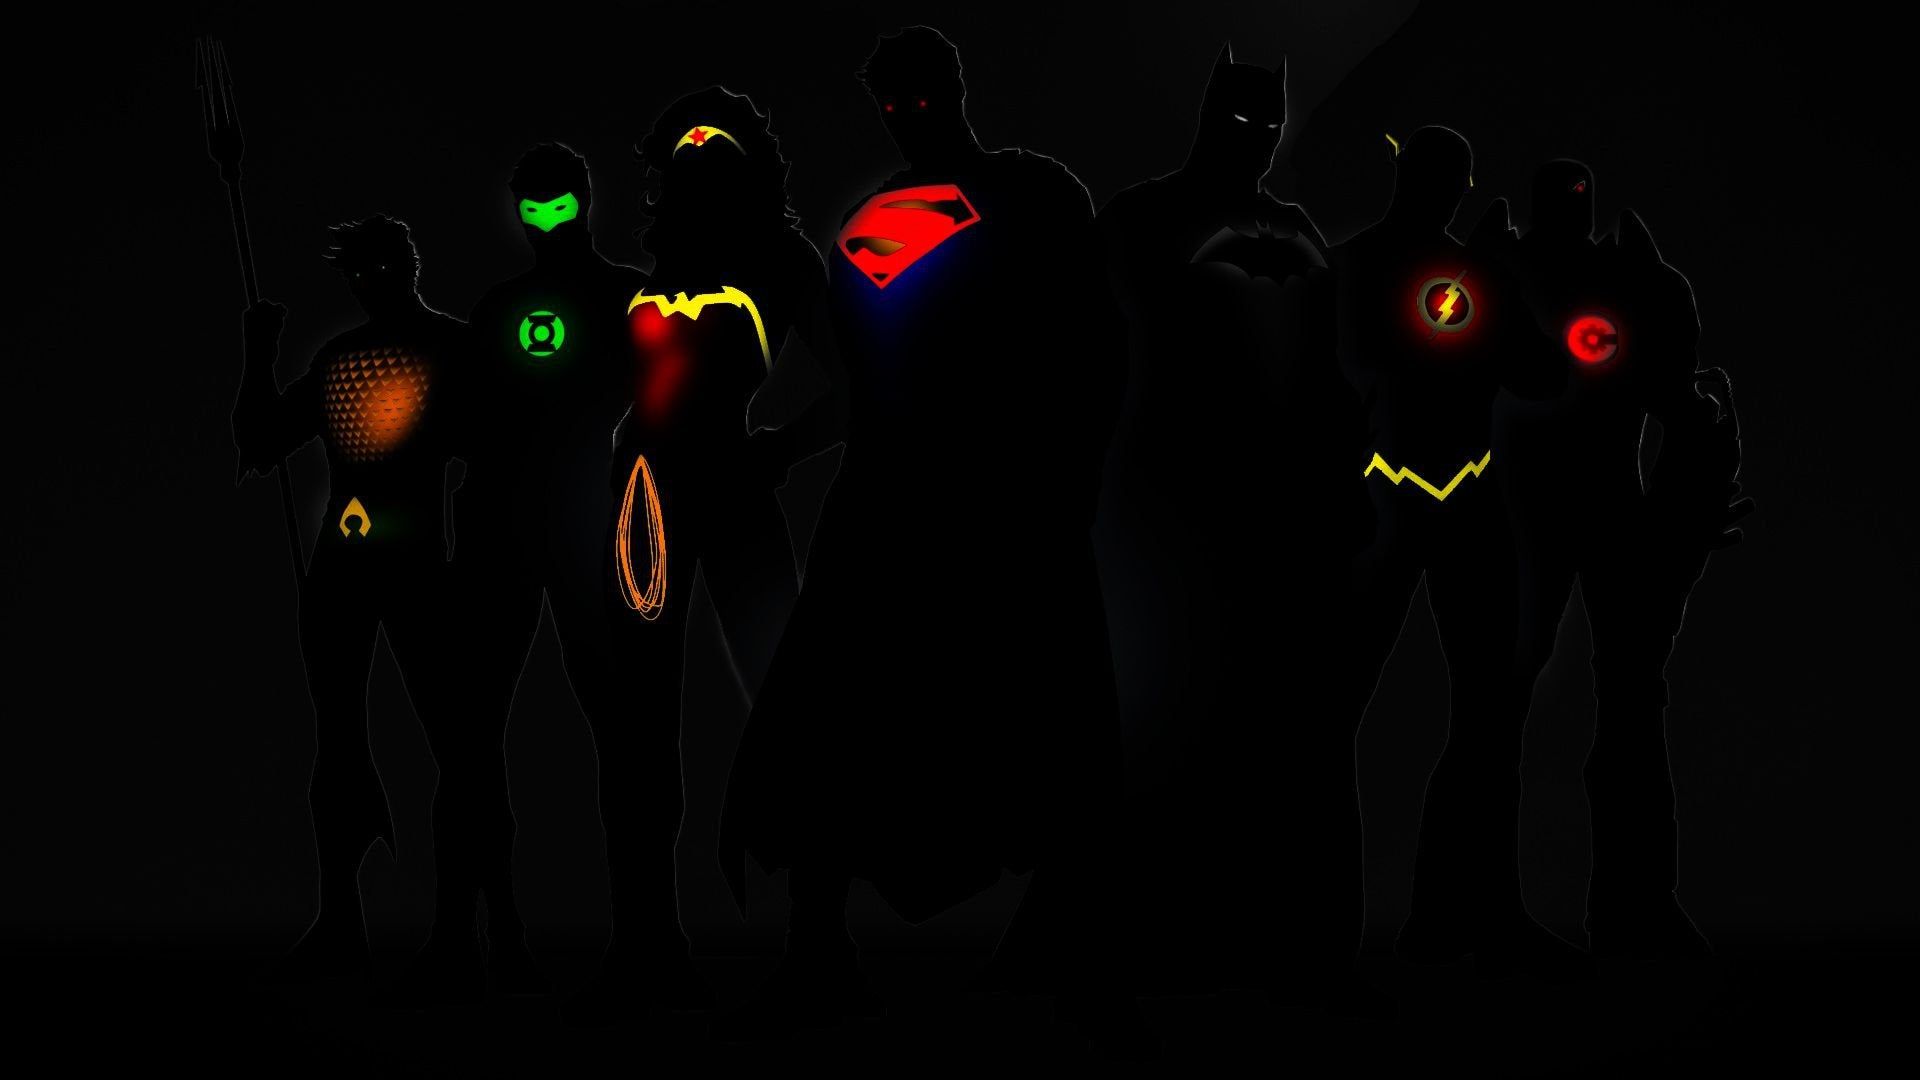 Dark Seid Justice League Minimal Wallpapers